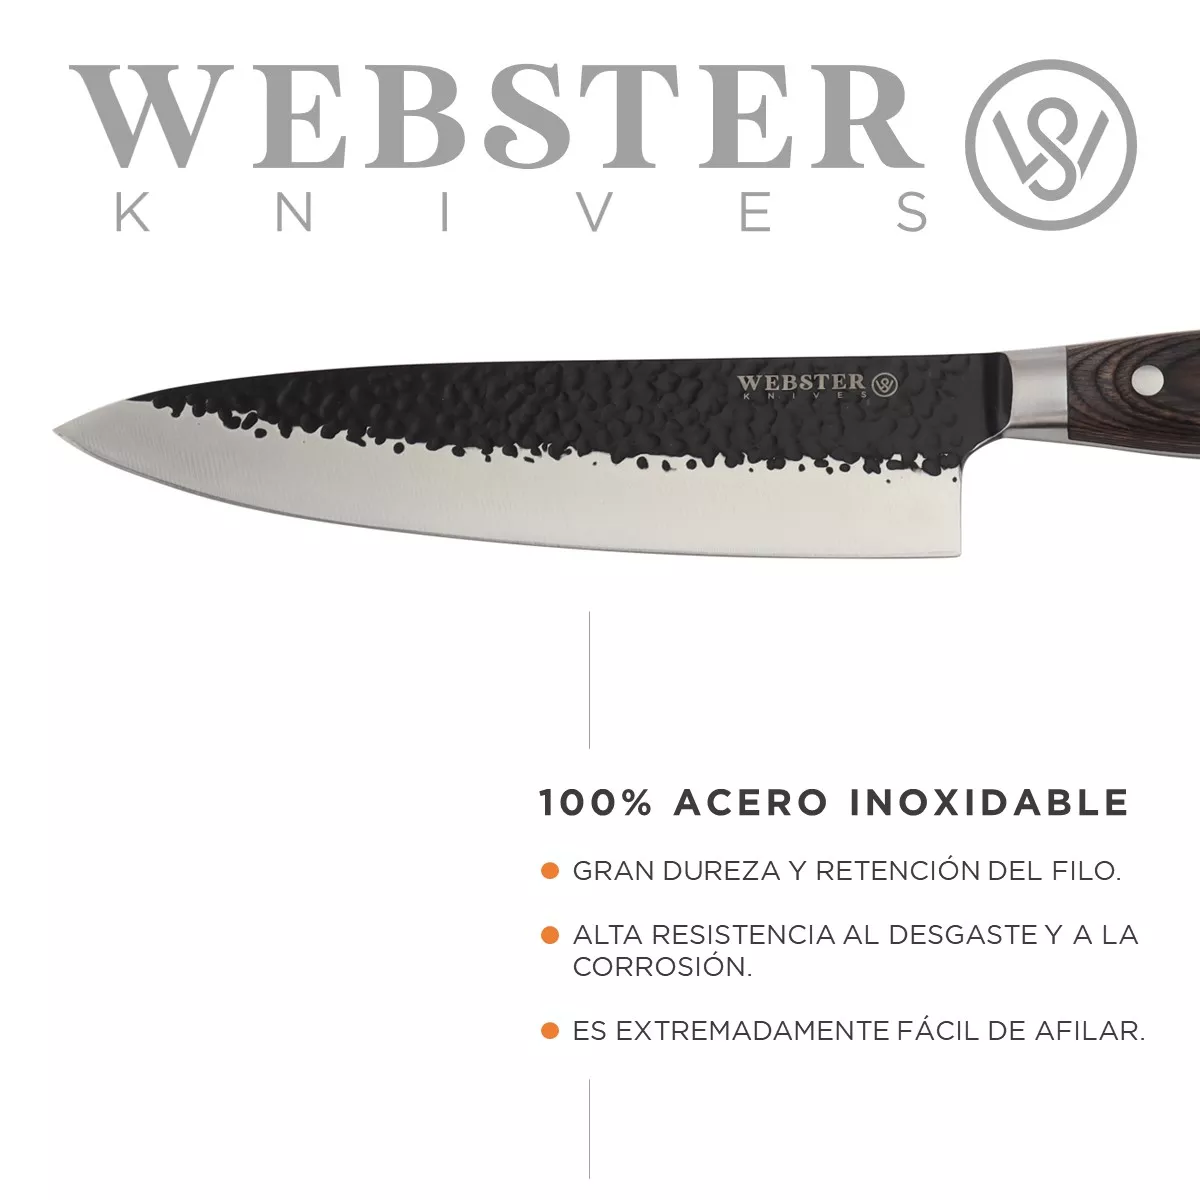 Segunda imagen para búsqueda de cuchillo chef